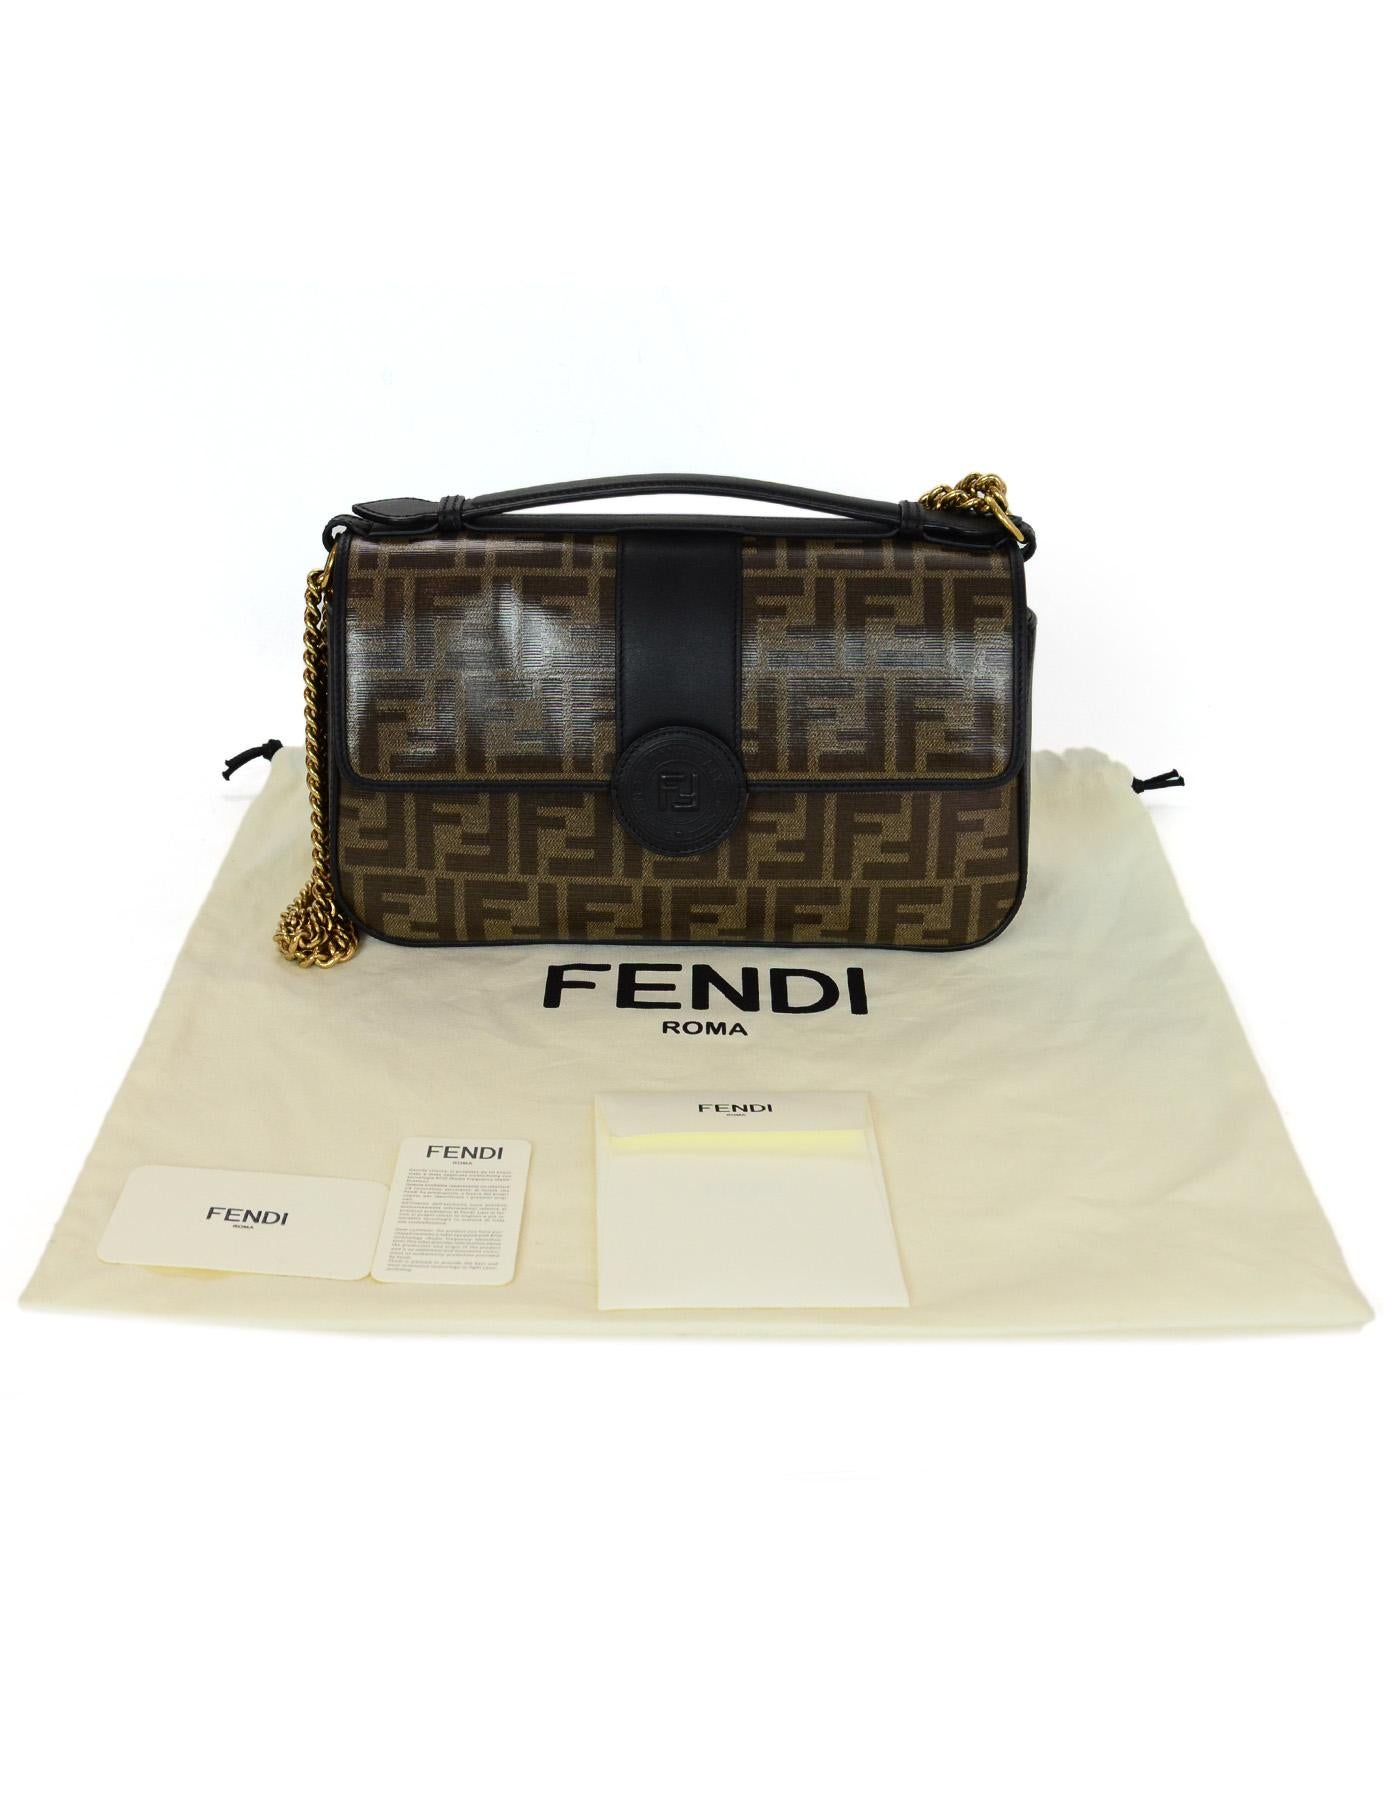 Fendi 2018 Black/Brown Leather/Canvas Monogram Double Flap Crossbody Bag 2